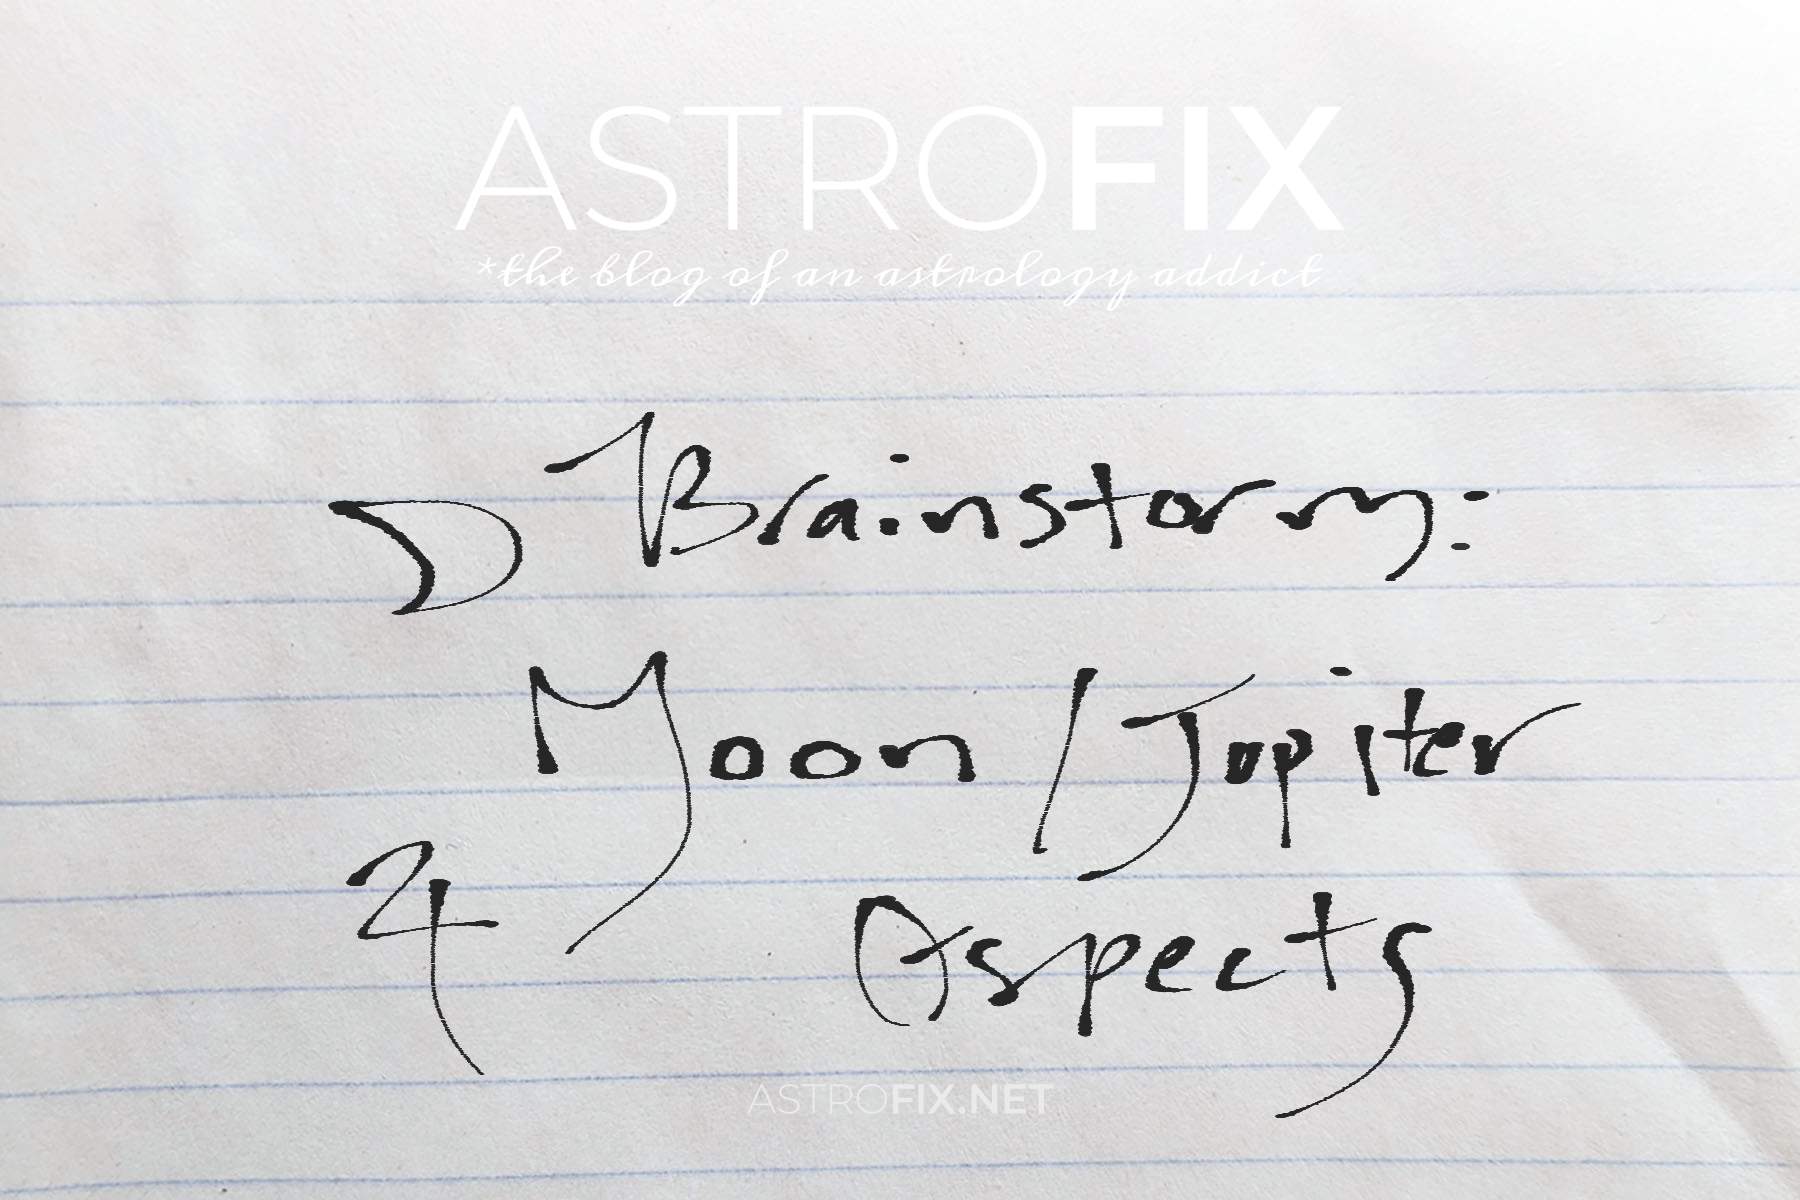 brainstorm-moon-jupiter-astrology-aspects